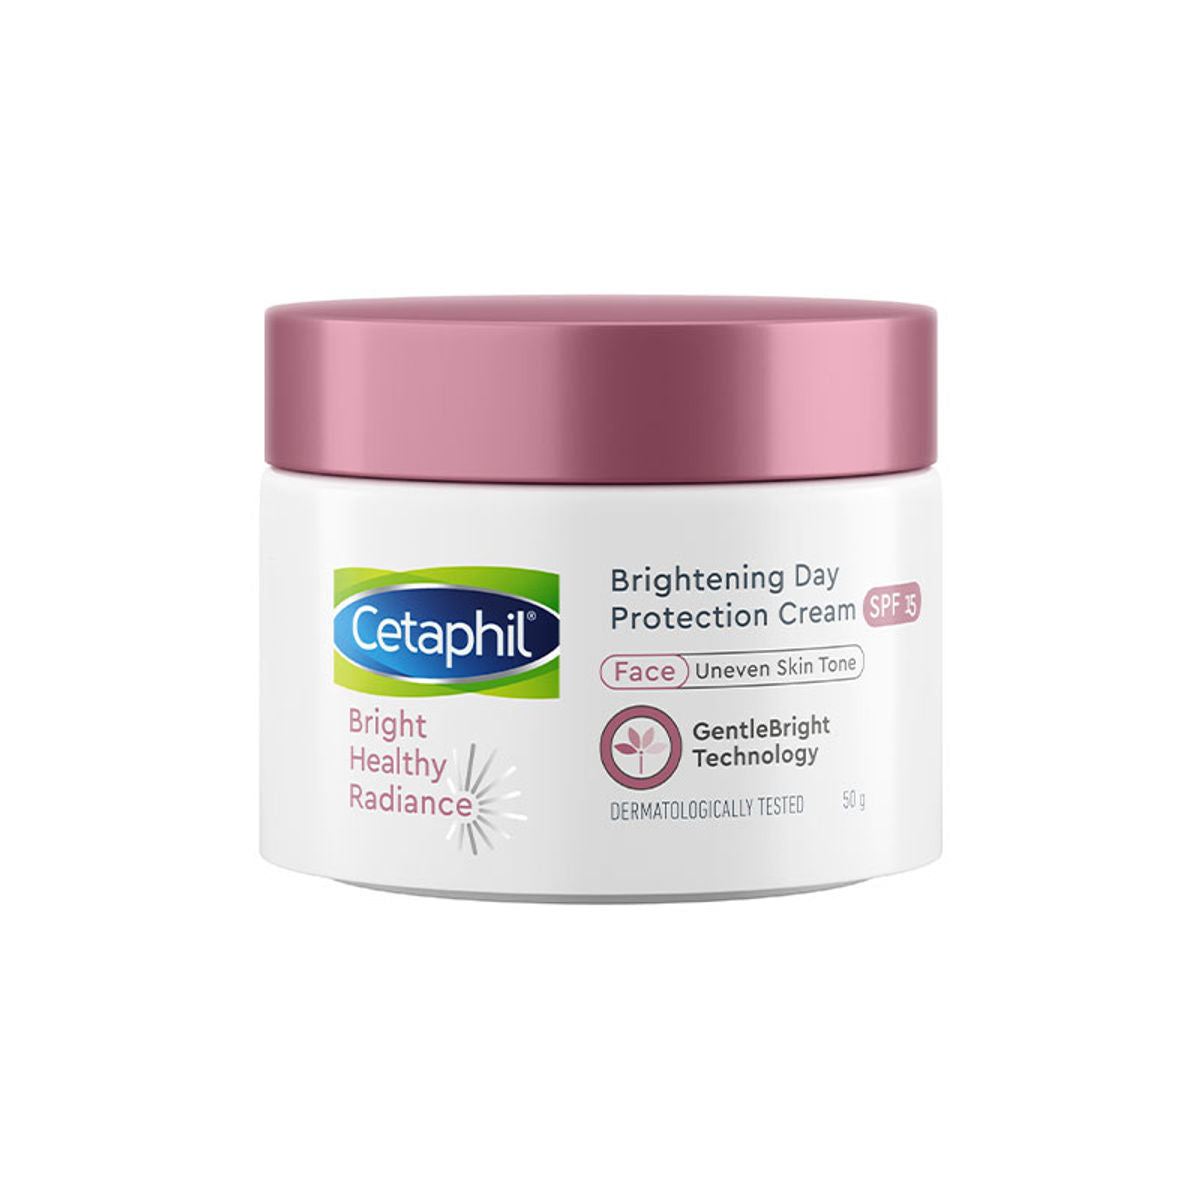 Cetaphil Bright Healthy Radiance Brightening Day Protection Cream (50 g) Cetaphil